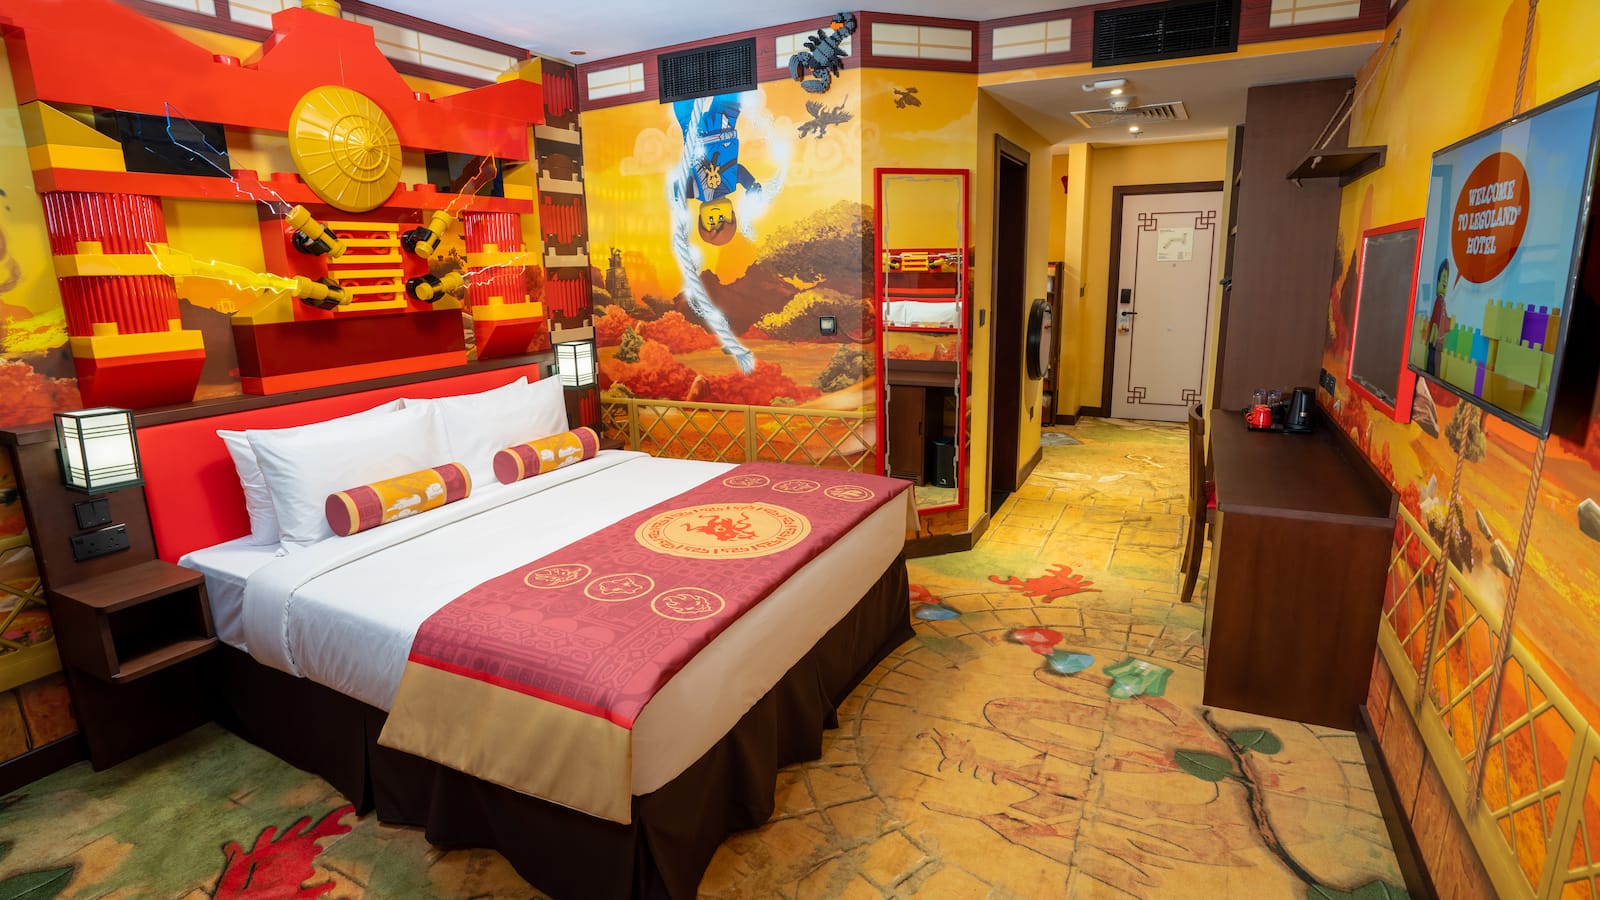 legoland_hotel_room_interior_ninjago_san diego ultimate guide_800x450